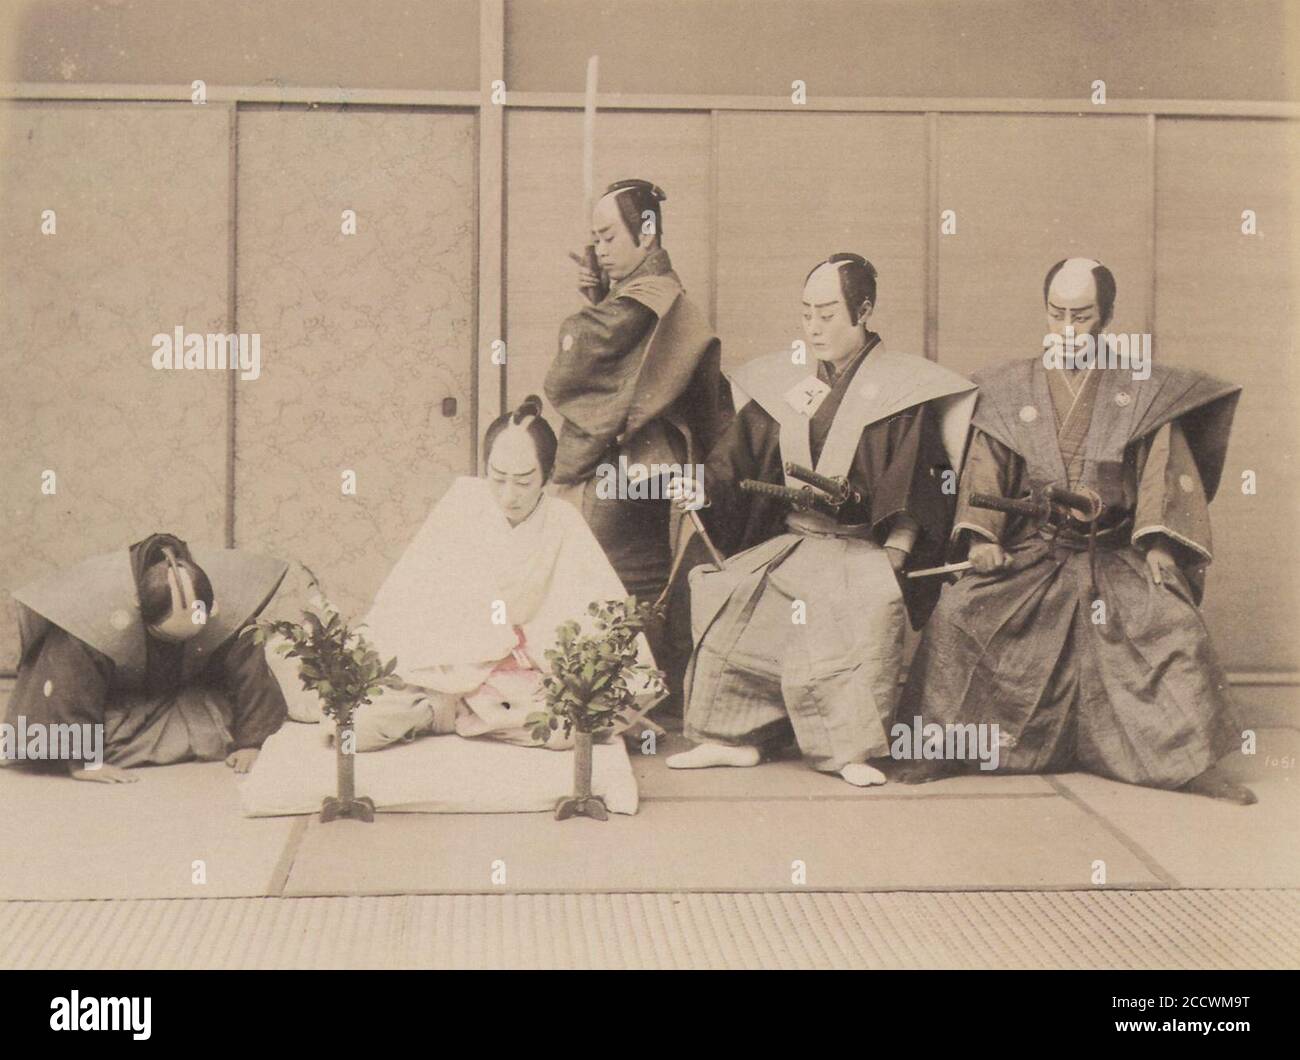 Japanischer Photograph um 1890 - Harakiri im Fotostudio Stock Photo